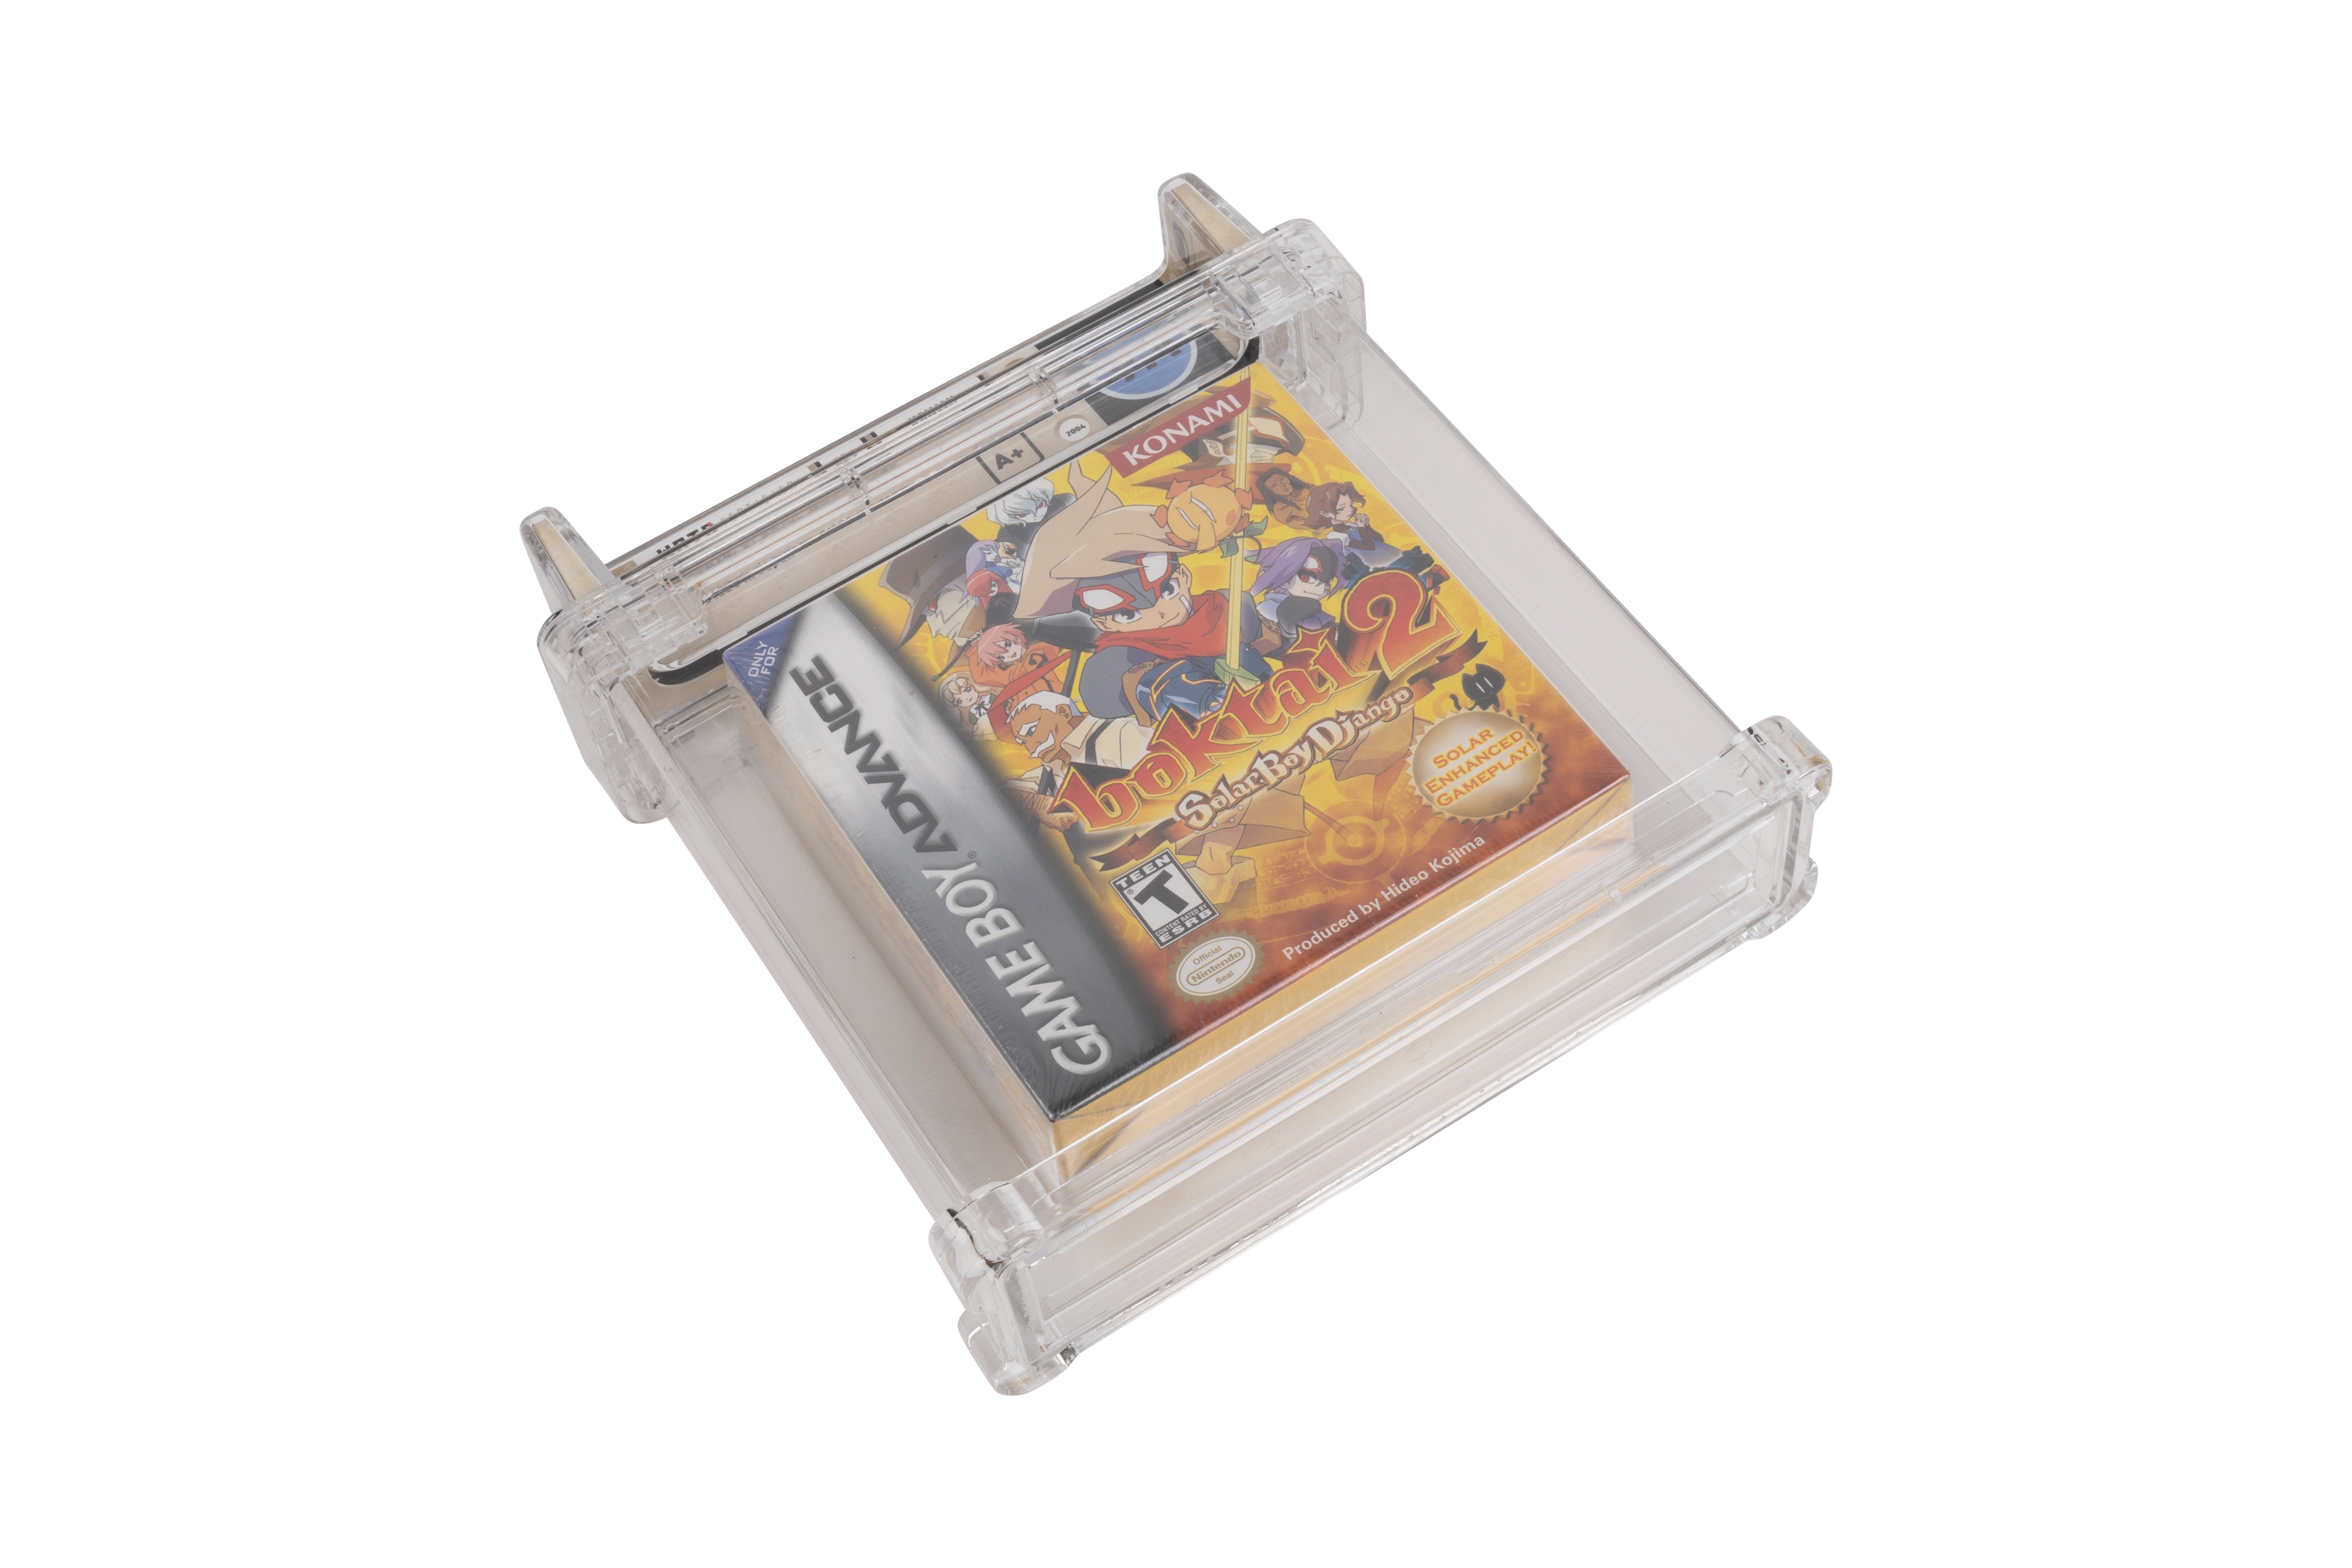 Nintendo - WATA 9.4 A+ Boktai 2 Solar Boy Django - Game Boy Advance